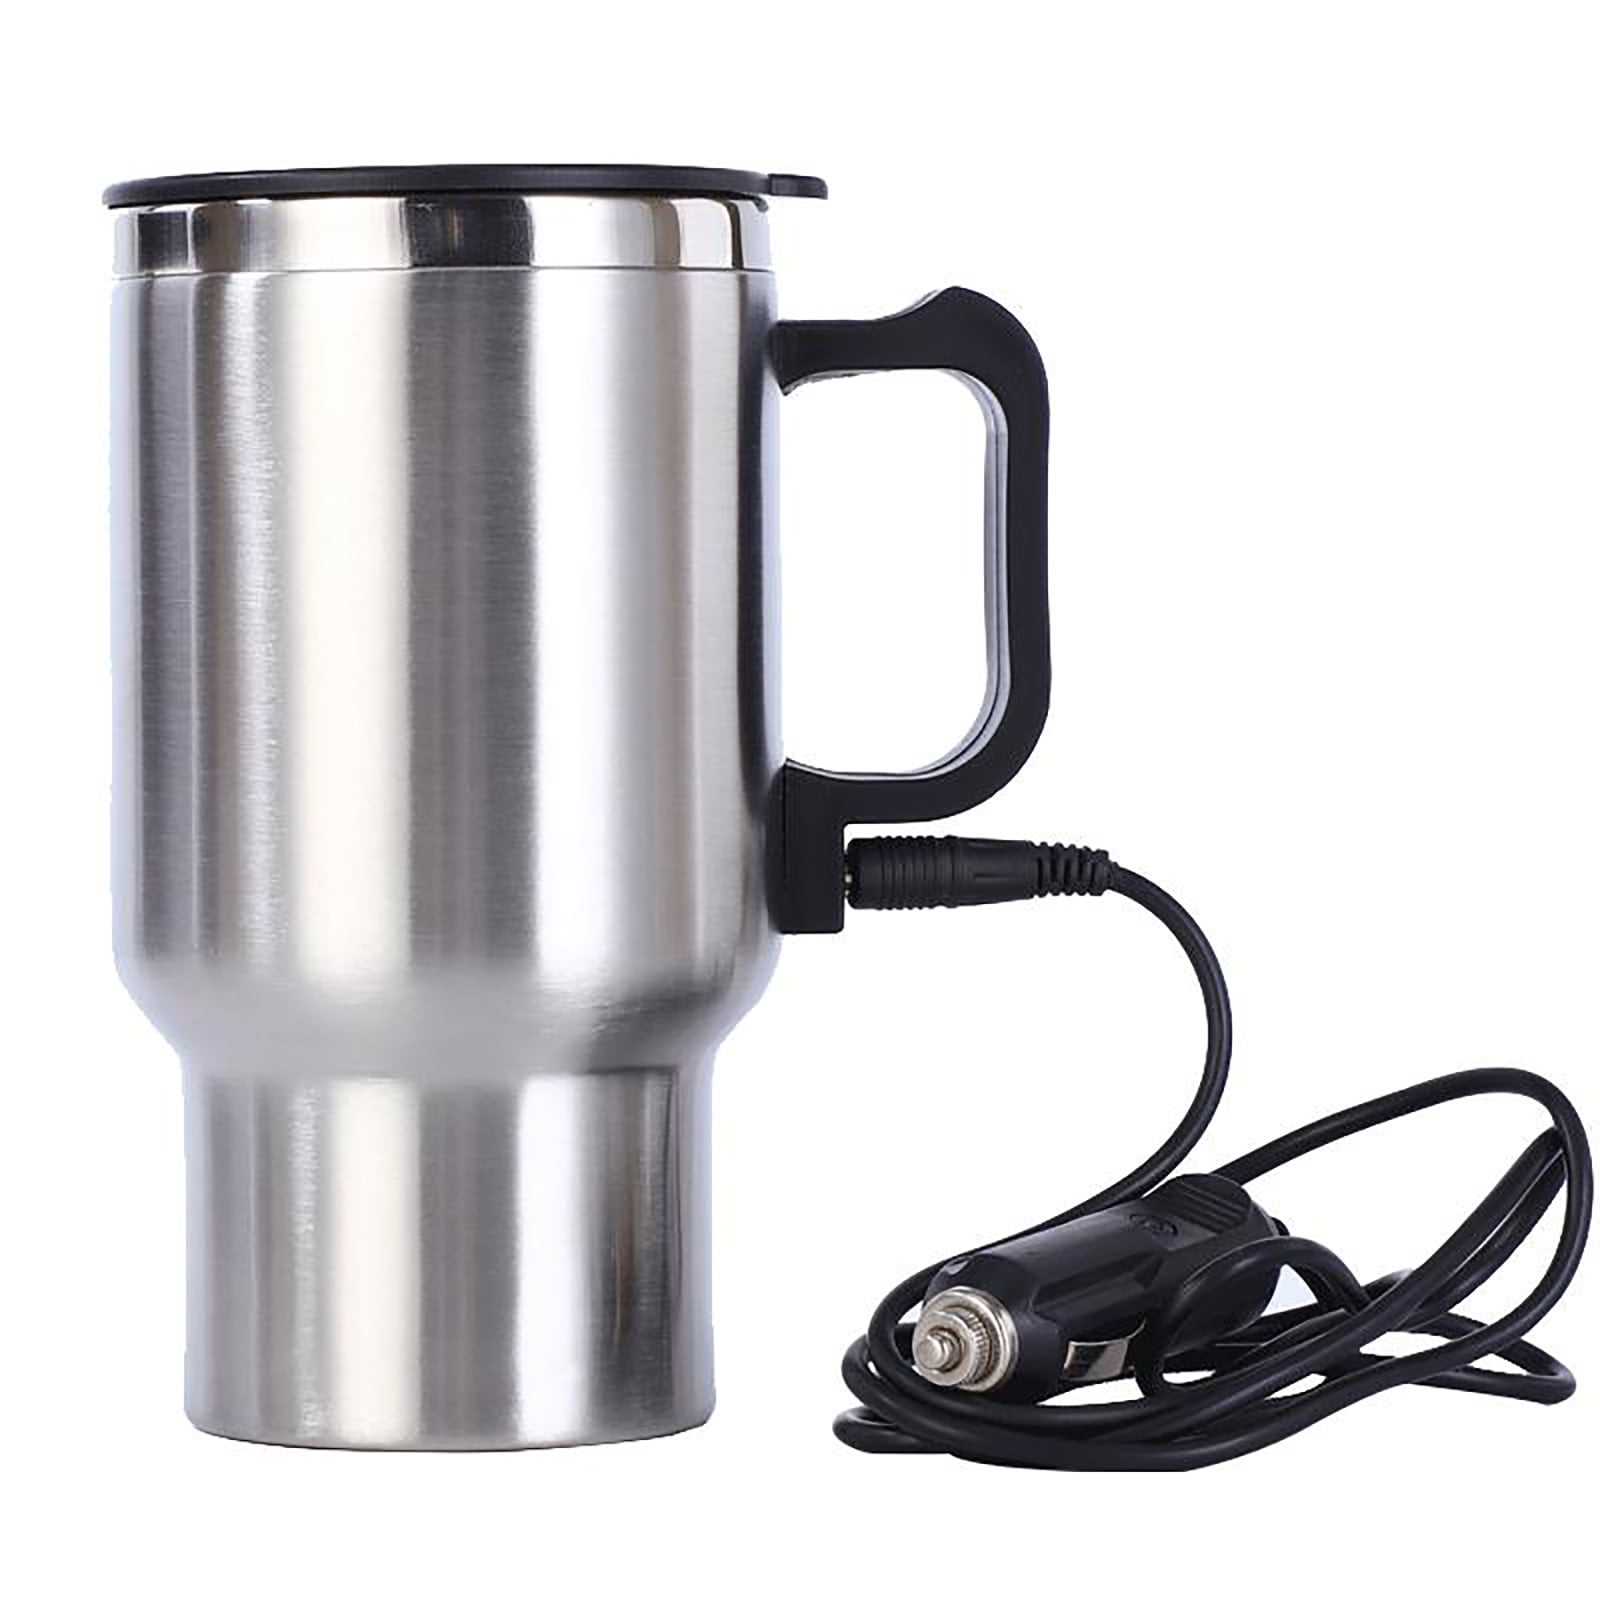  Heated Travel Mug, 12V 450ml Electric Incar Stainless